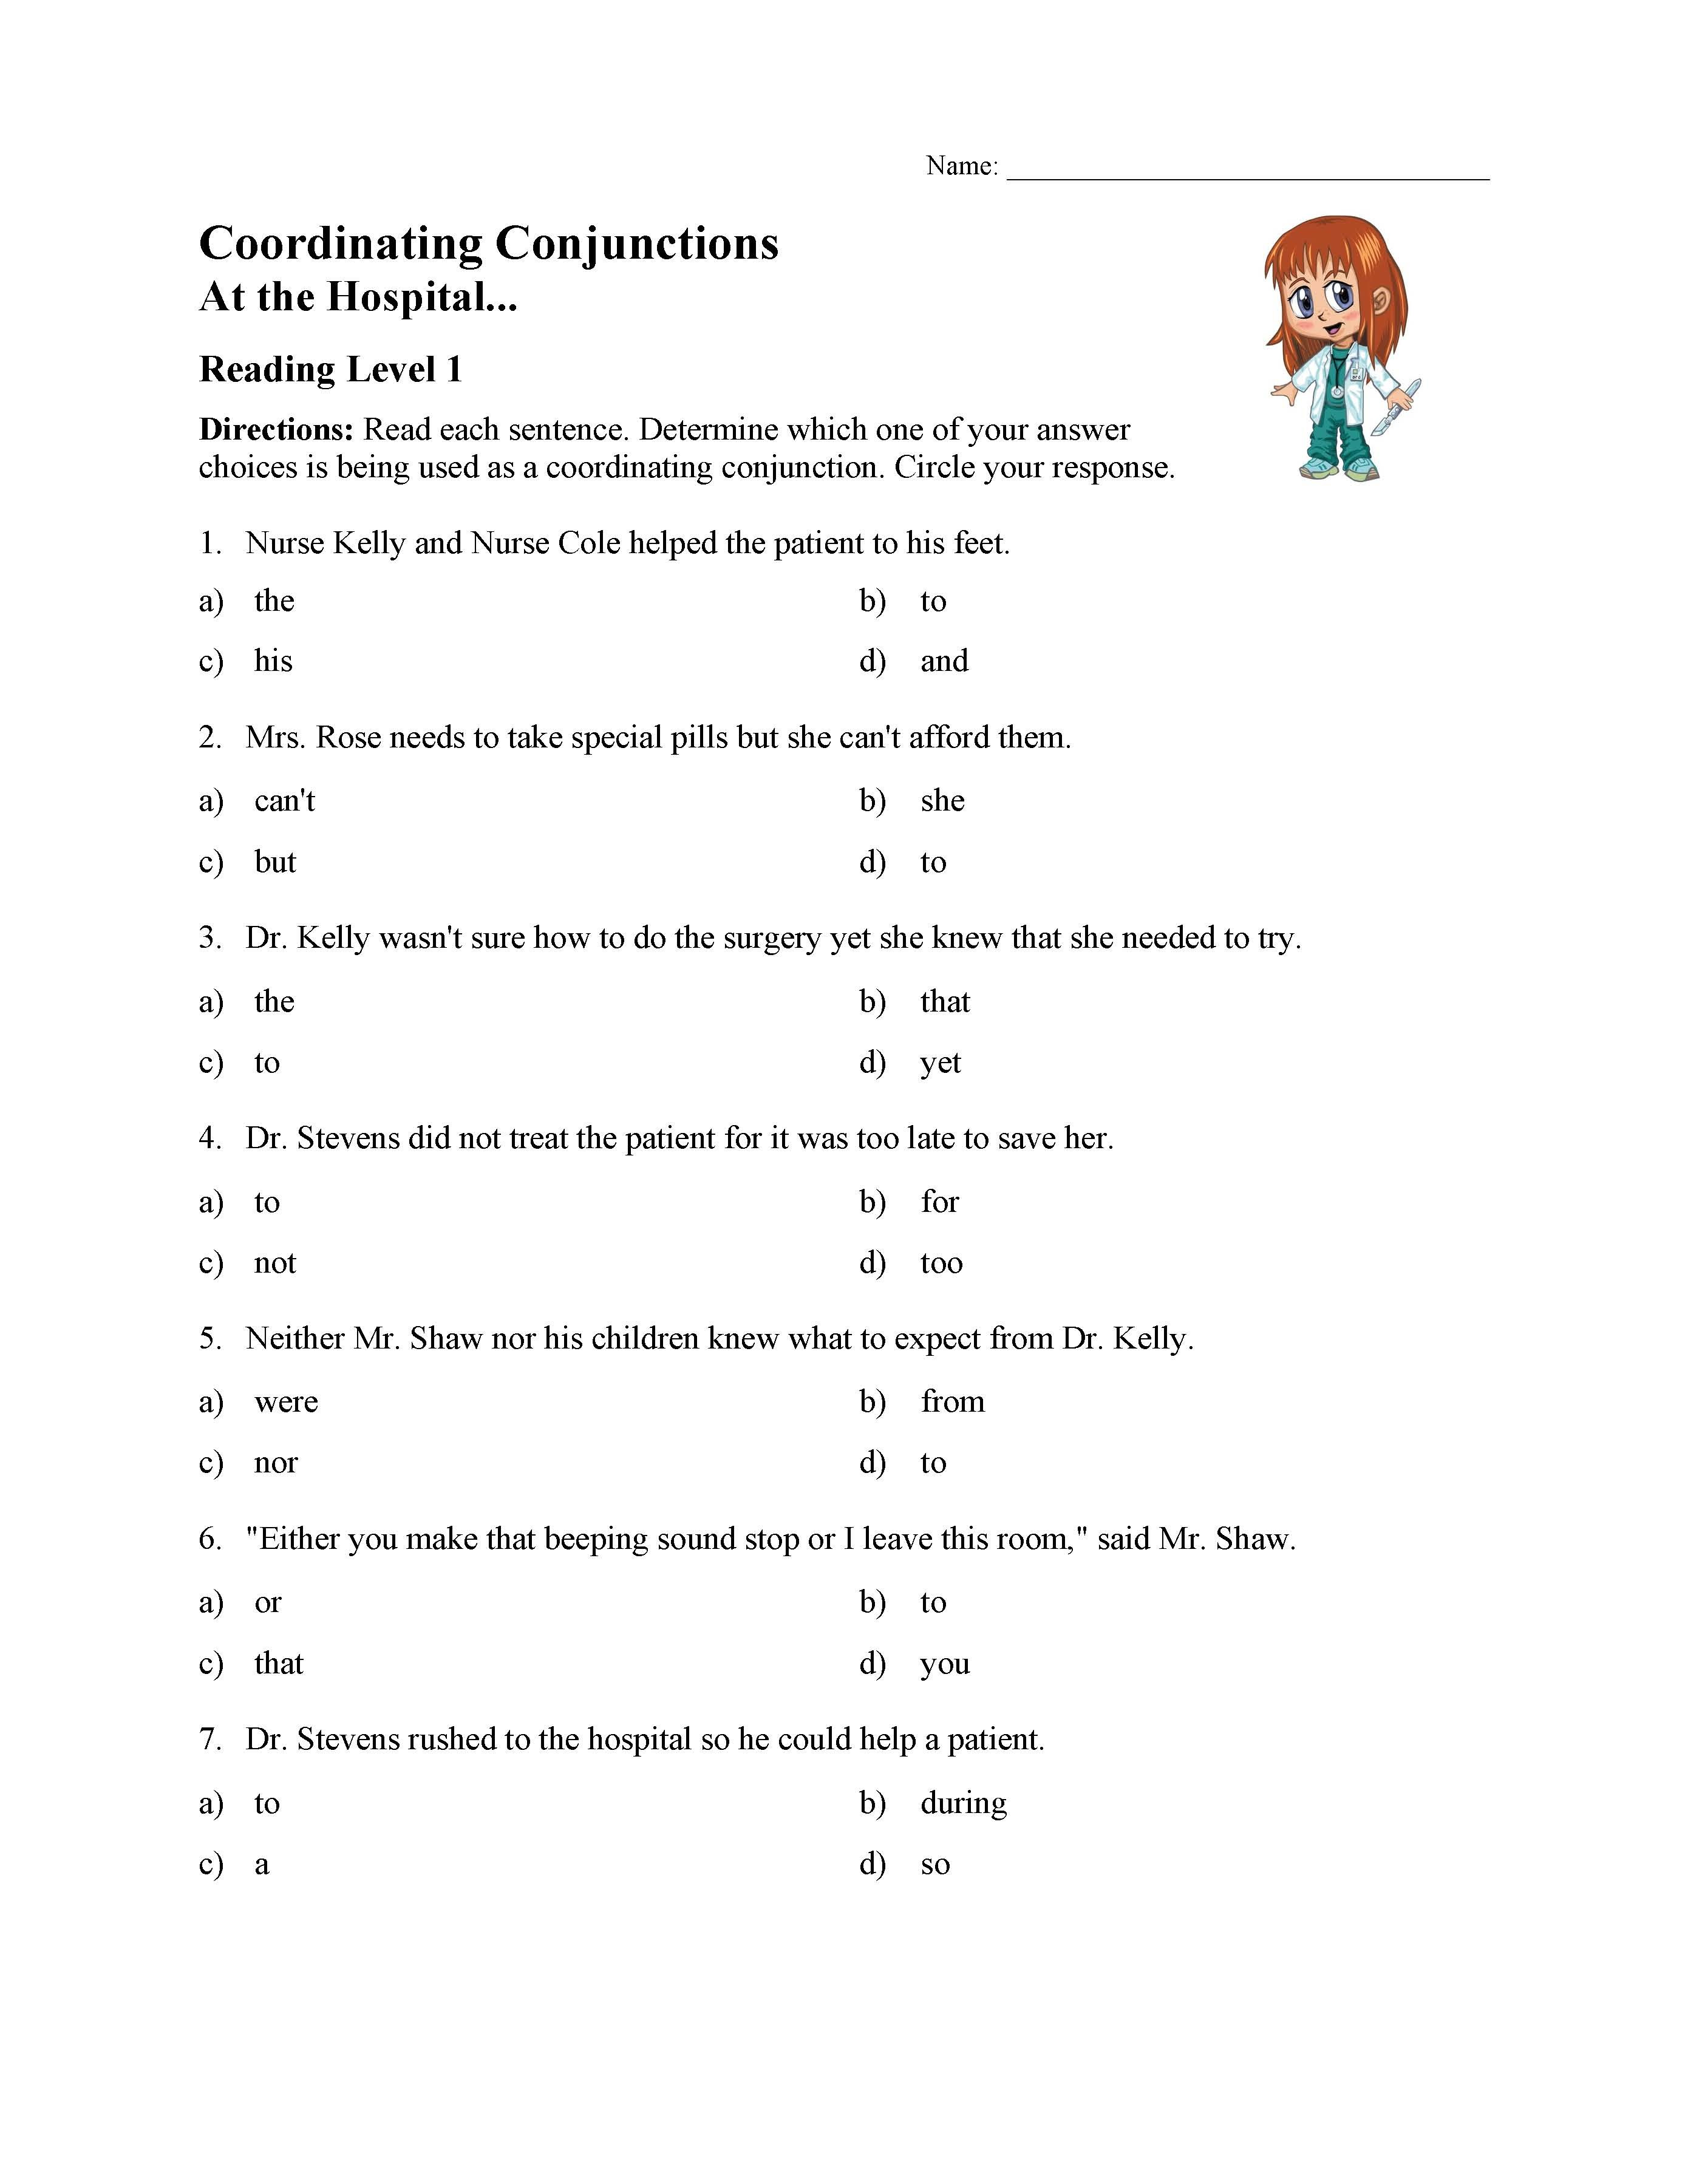 20 Conjunction Worksheet 3rd Grade Desalas Template